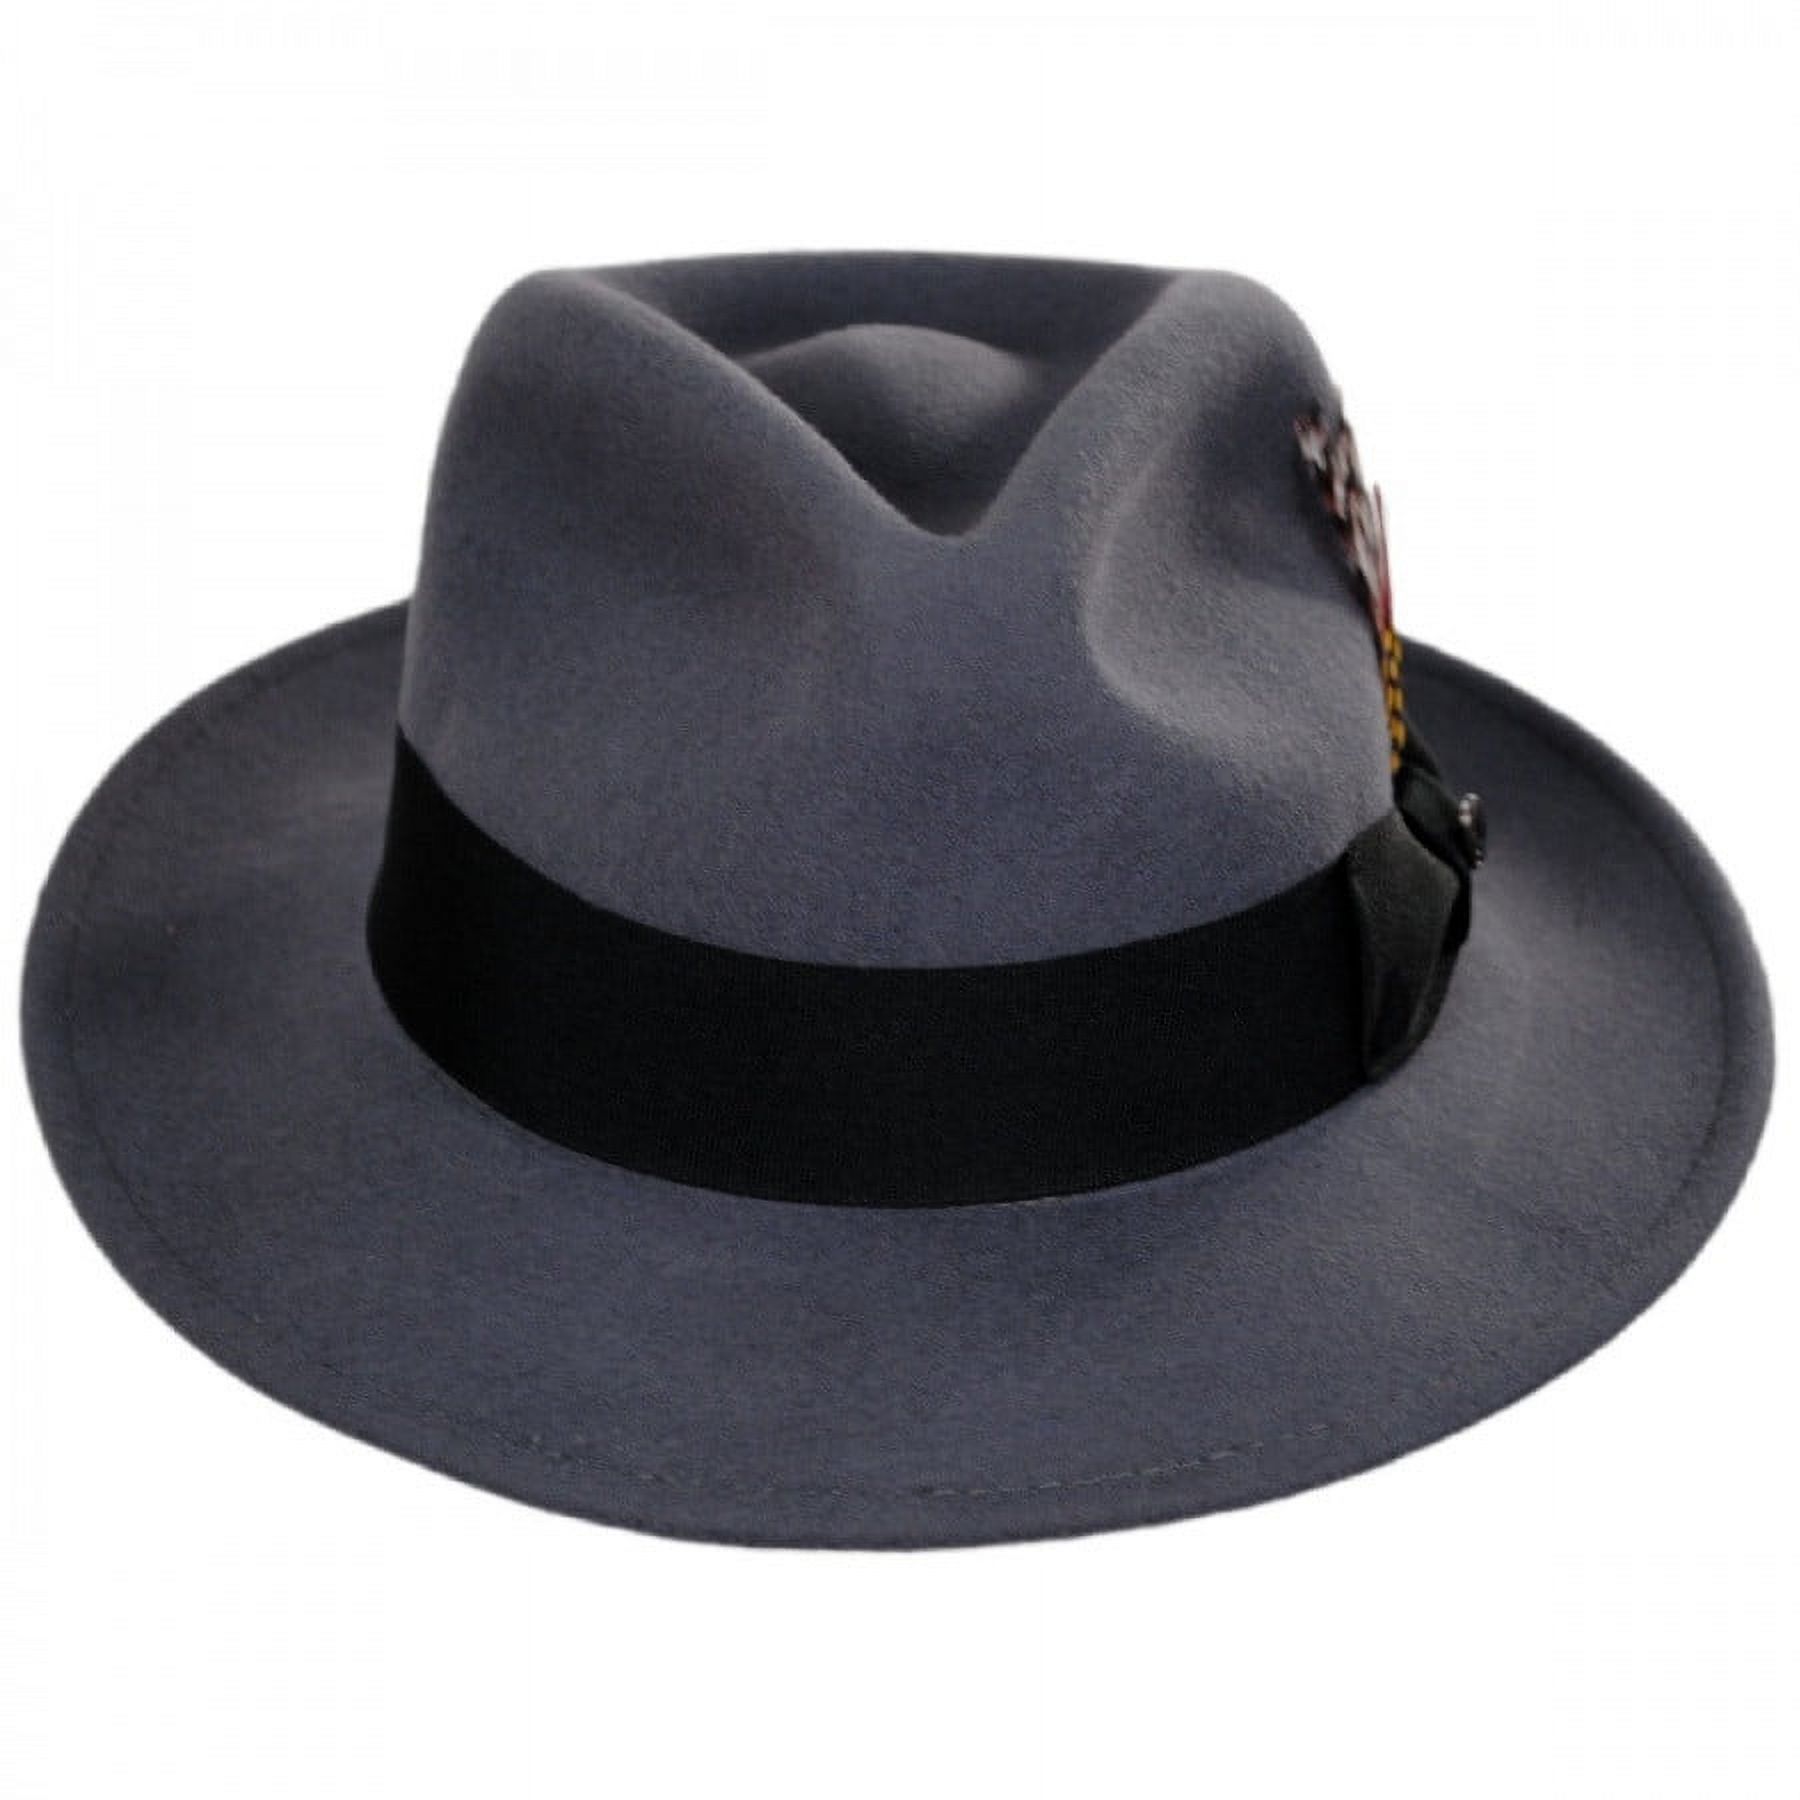 C-Crown Crushable Wool Felt Fedora Hat - XL - Gray - image 2 of 4